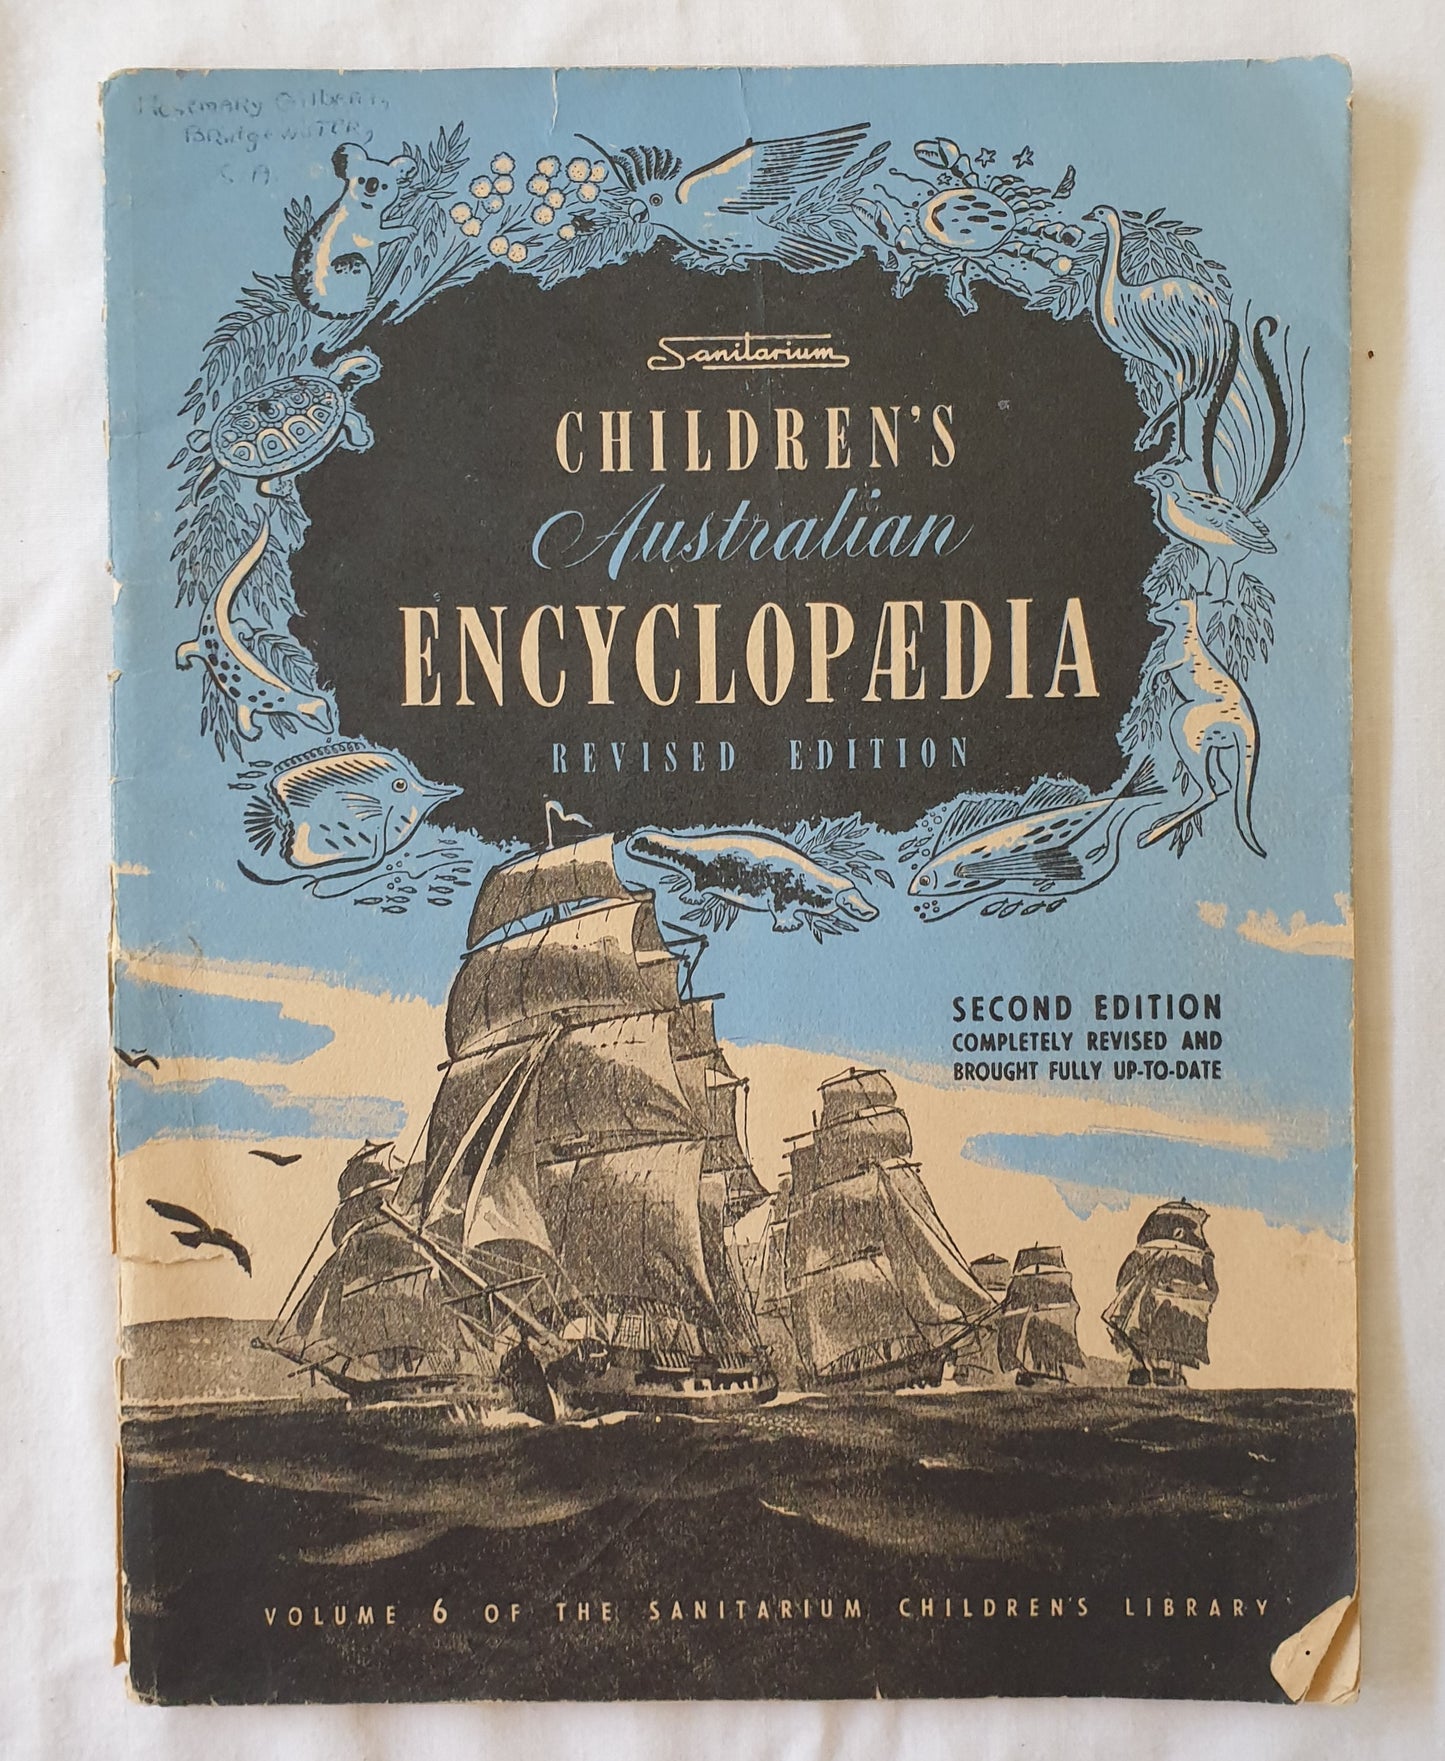 Children’s Abbreviated Australian Encyclopaedia by The Sanitarium Health Food Company